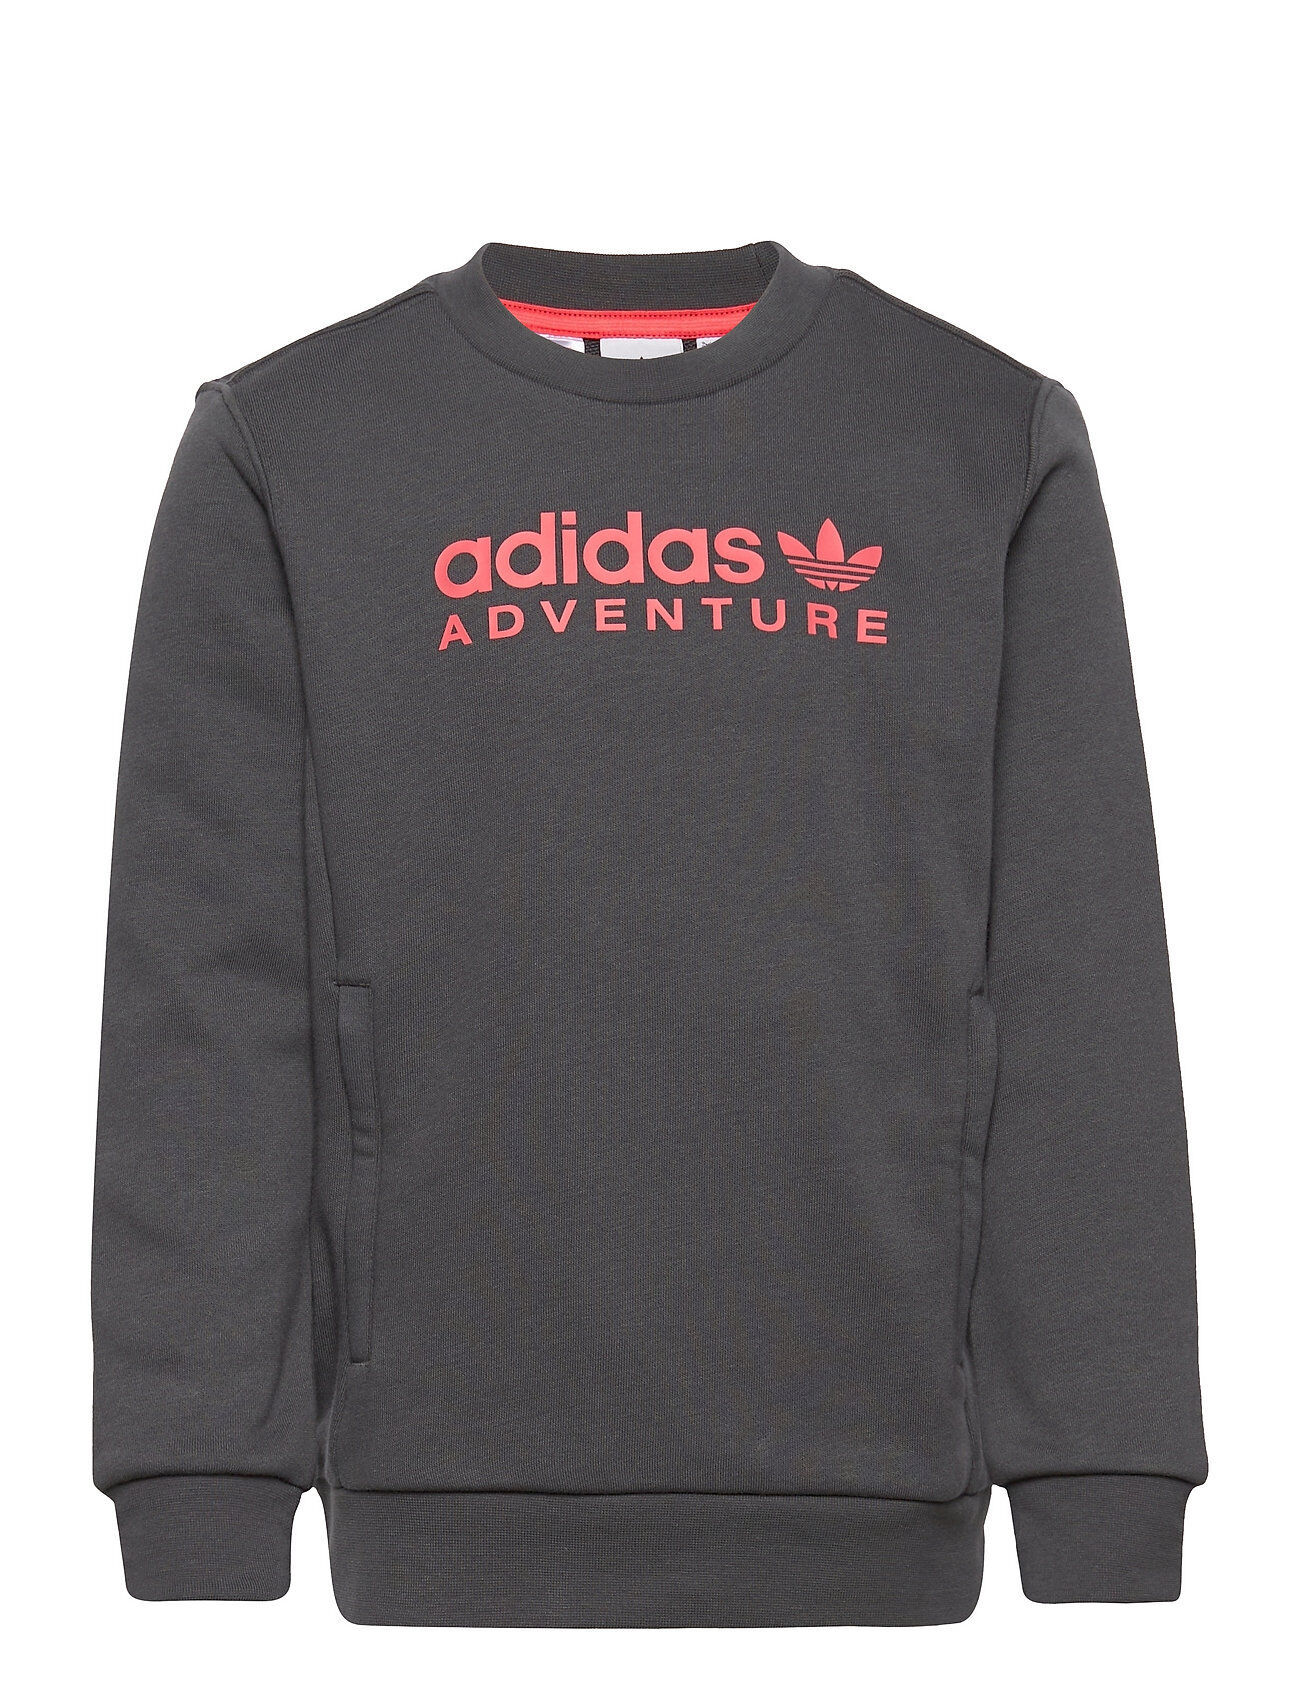 adidas Originals Adventure Crew Sweatshirt Sweat-shirt Genser Brun Adidas Originals